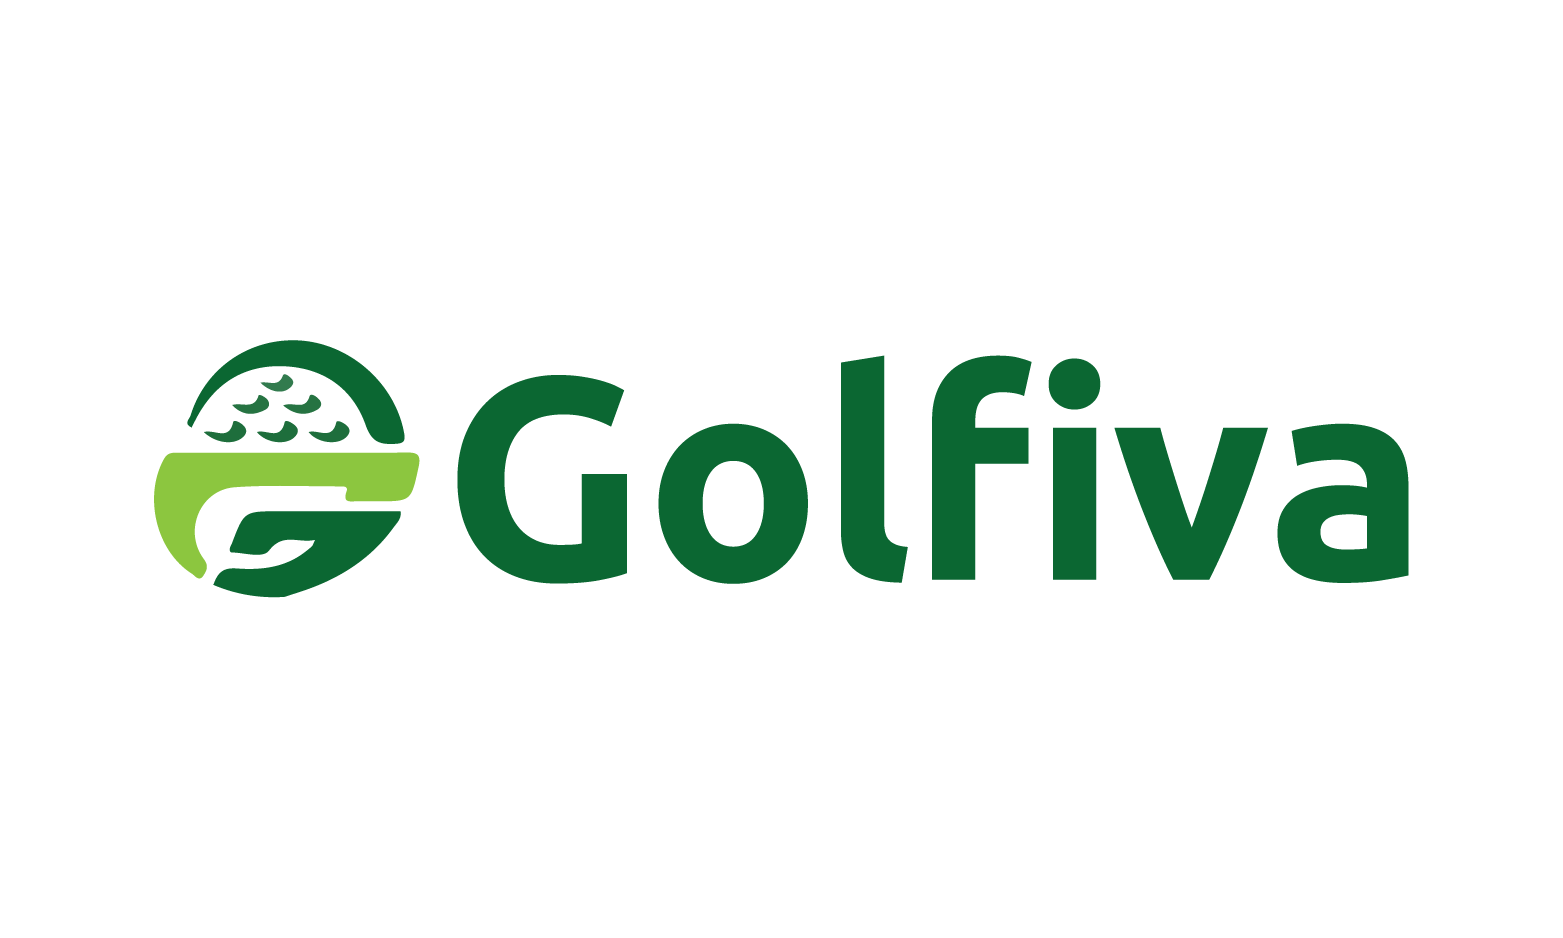 Golfiva.com - Creative brandable domain for sale